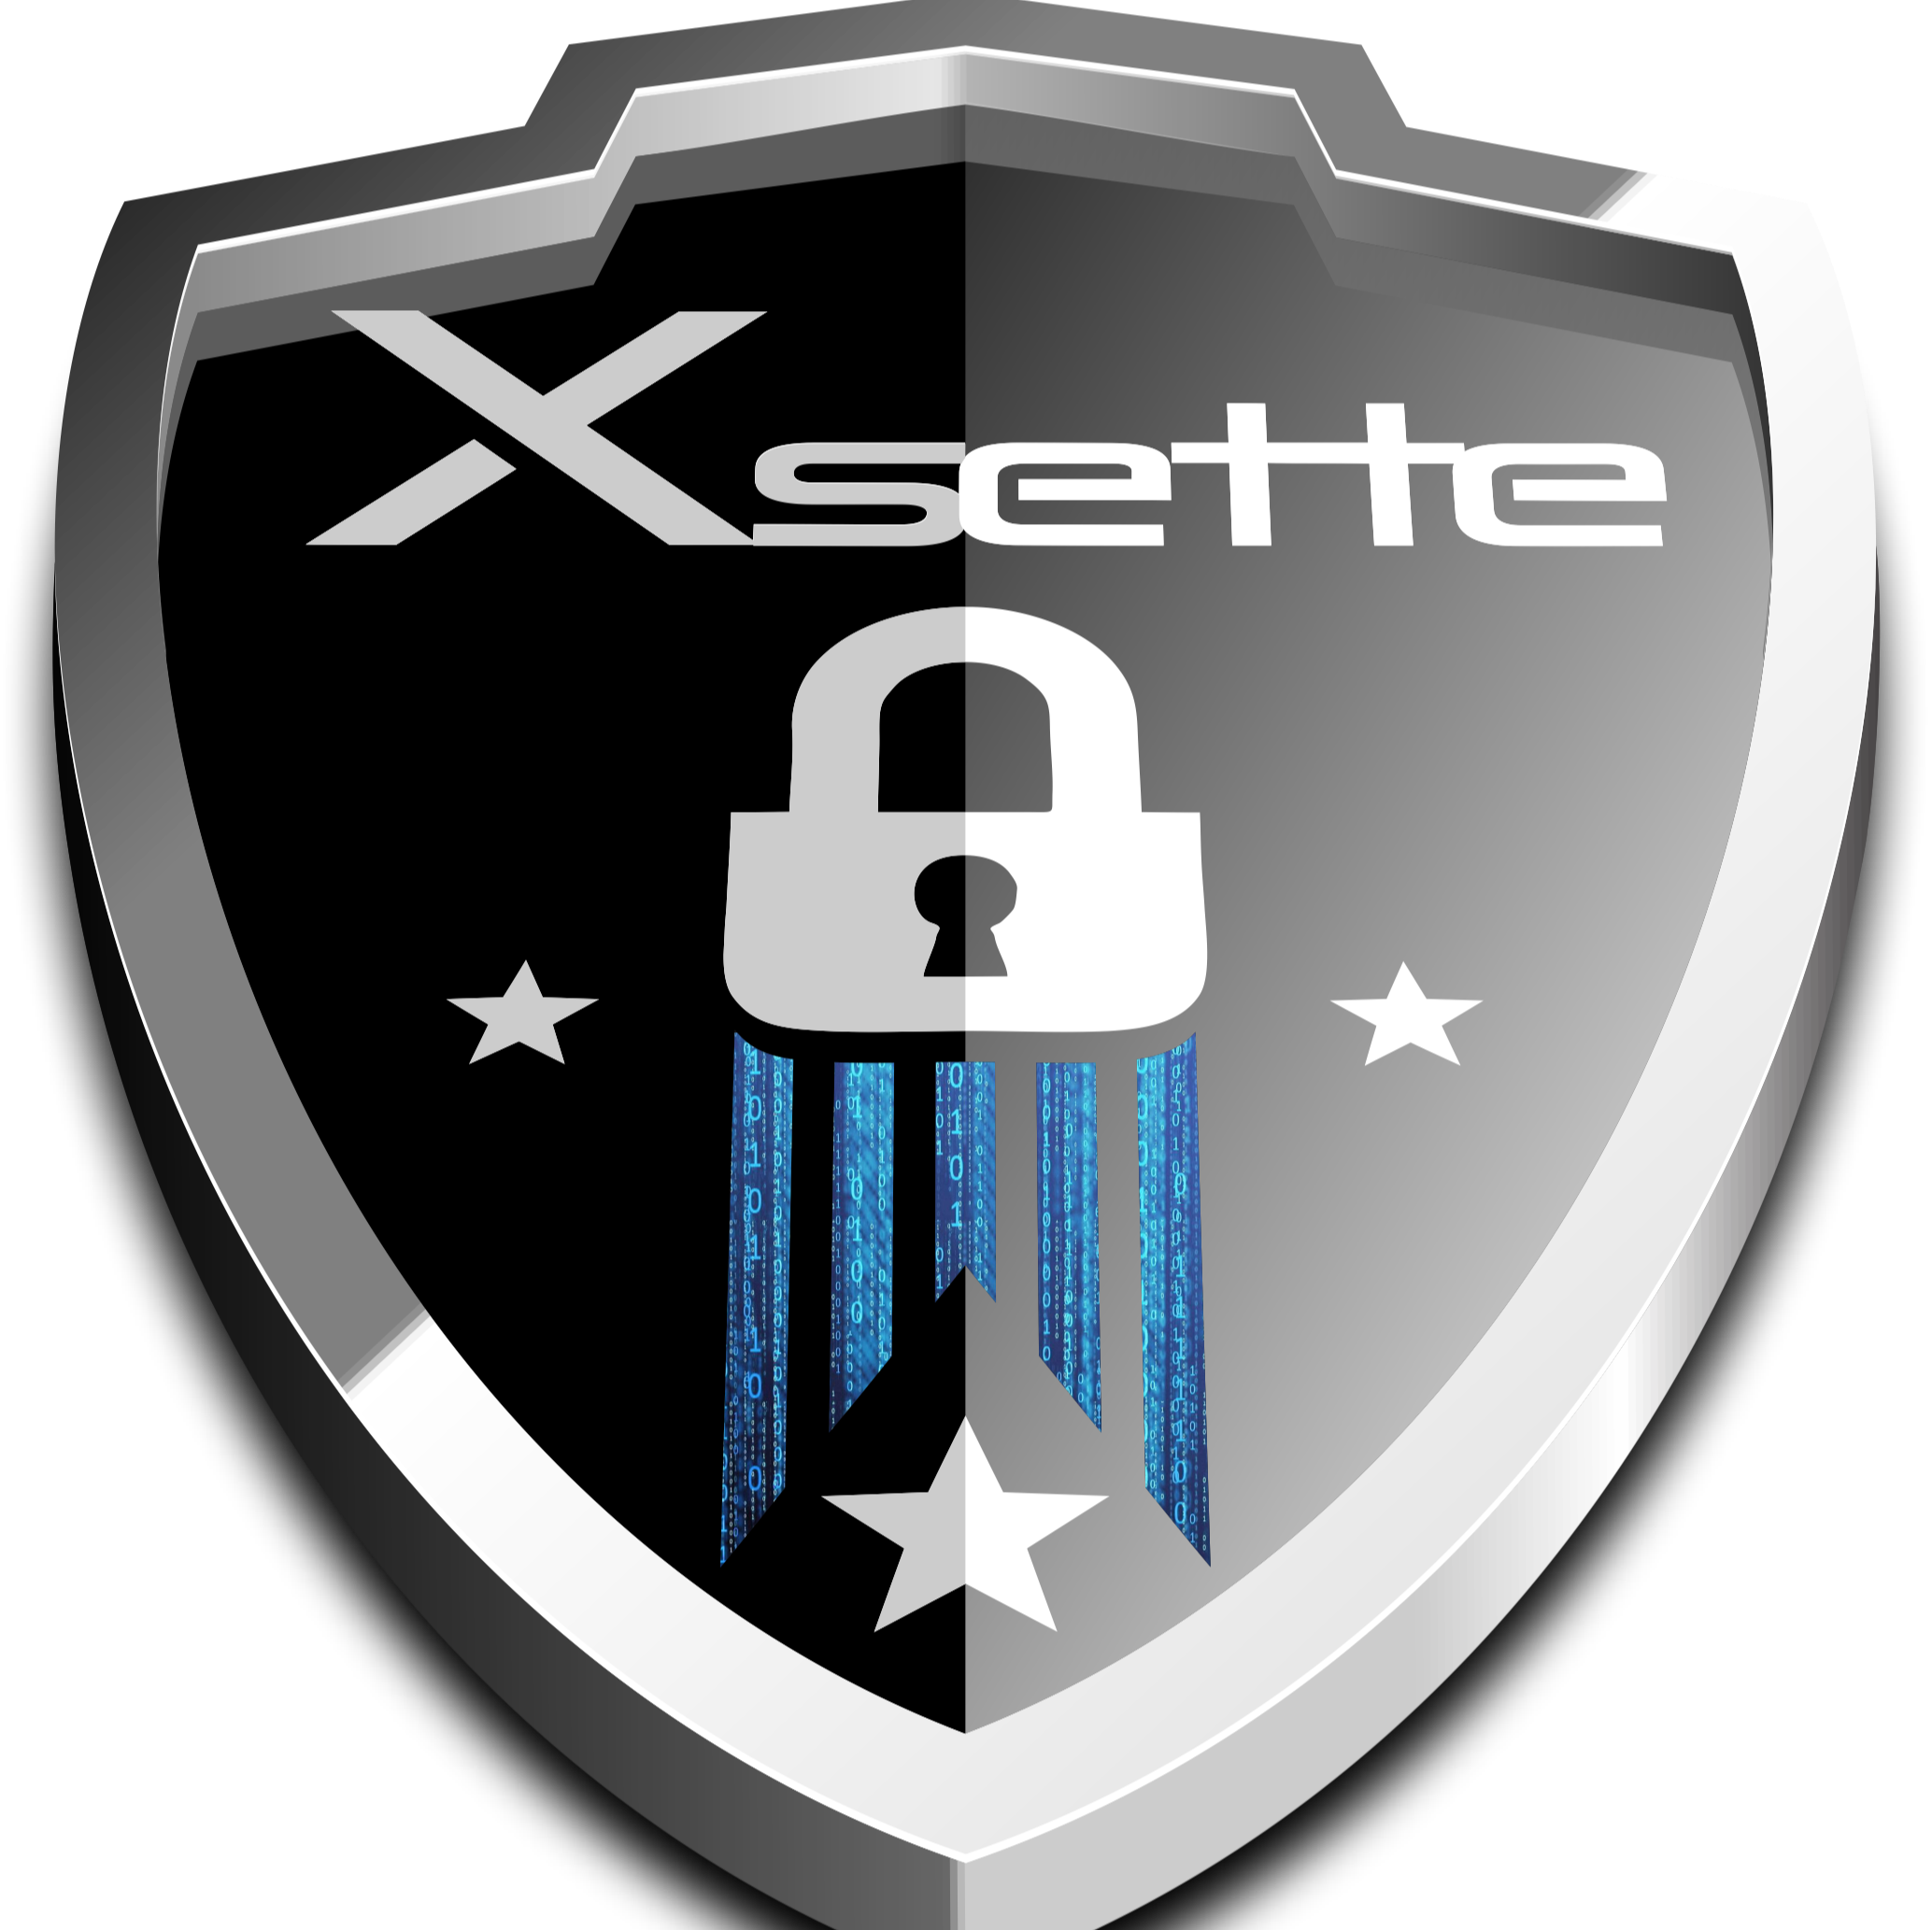 Xsette Technology, Inc.